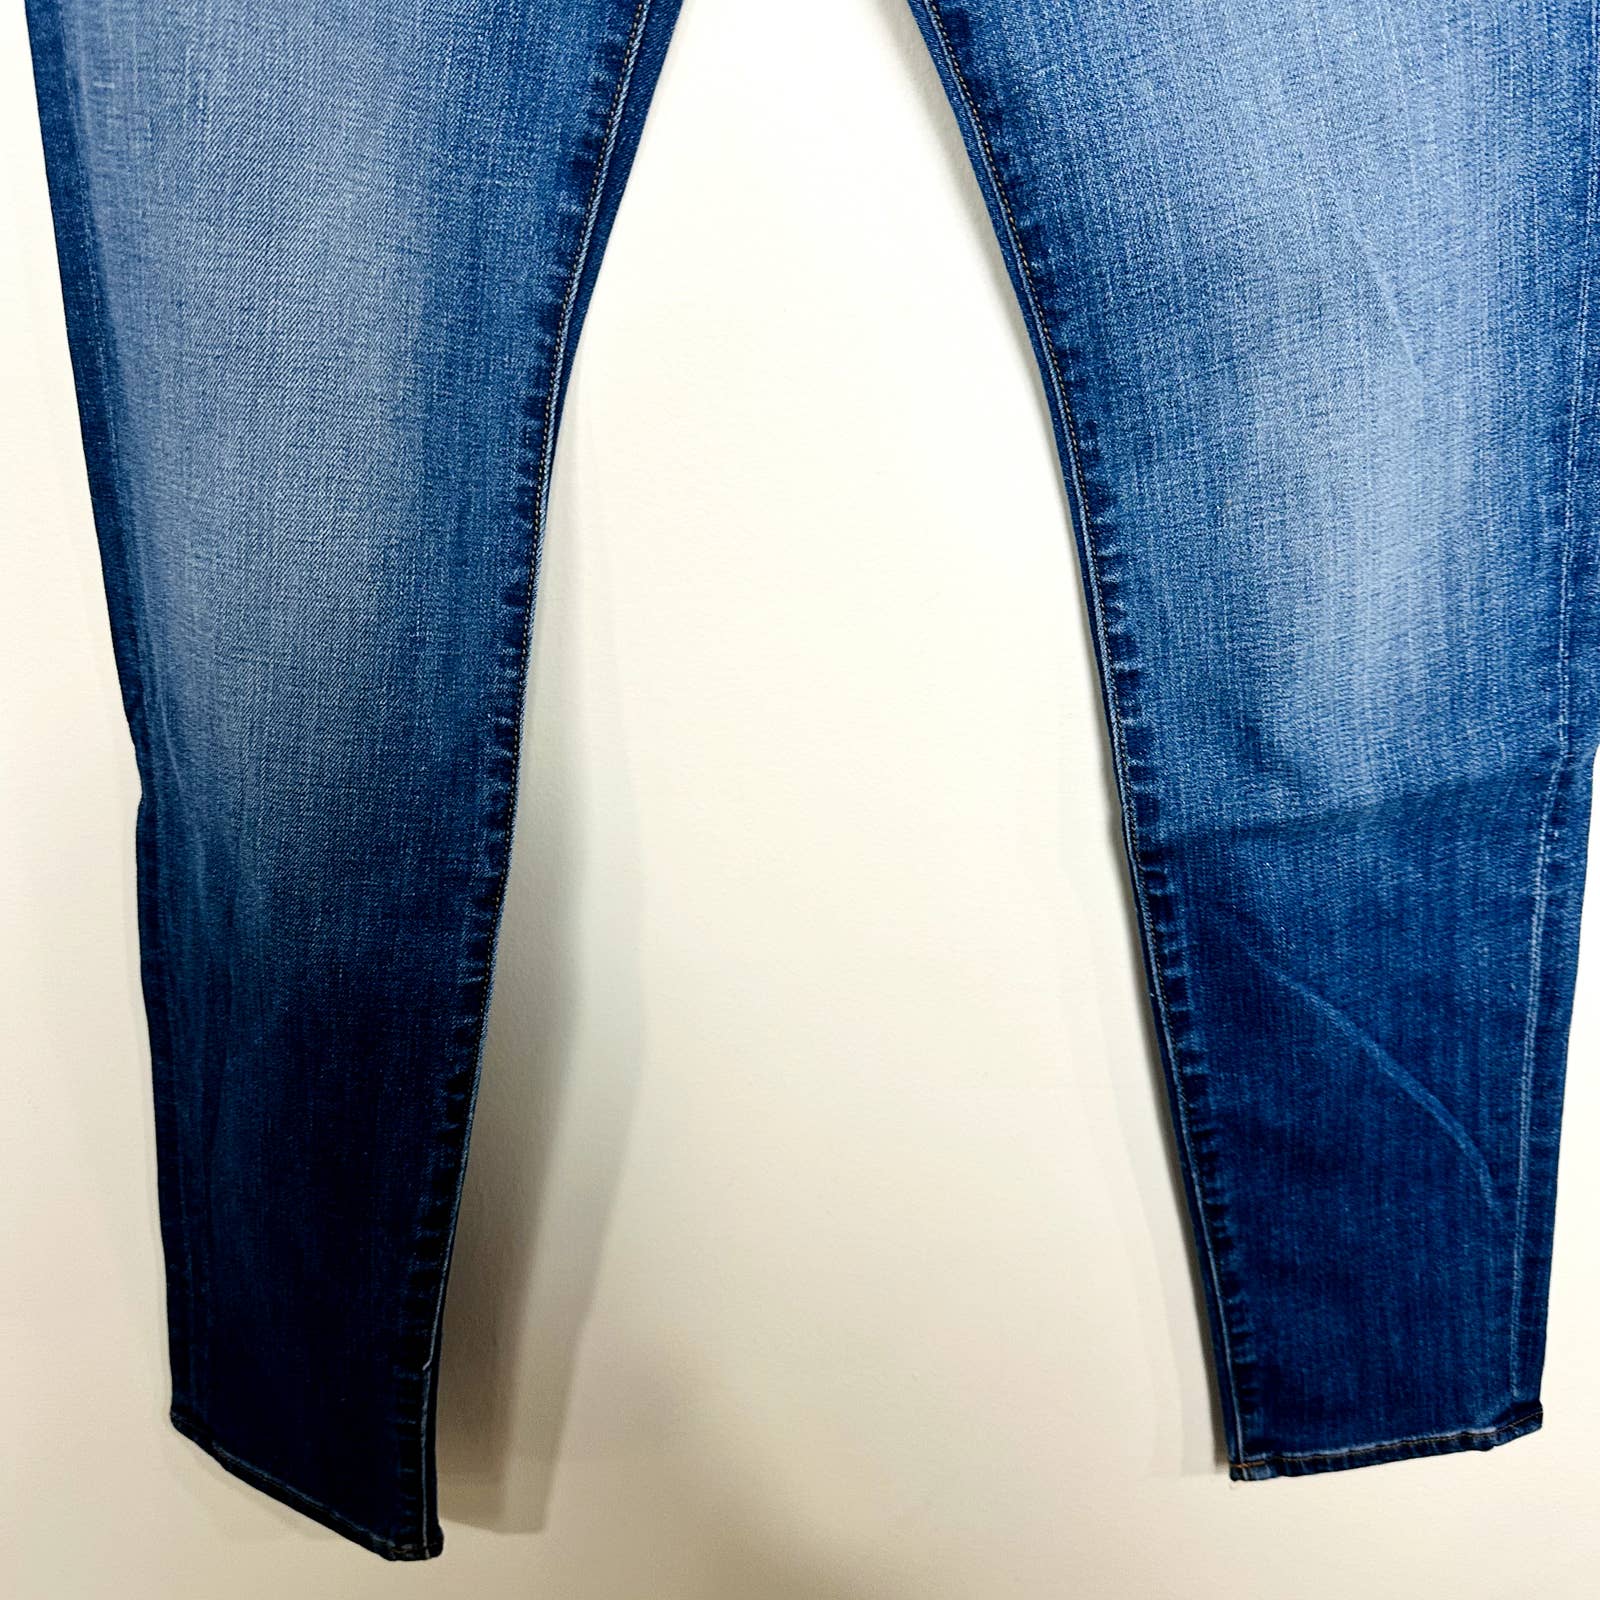 Free People X Sandrine Rose Mid-Rise Skinny Denim Jeans Indigo R1018-D007